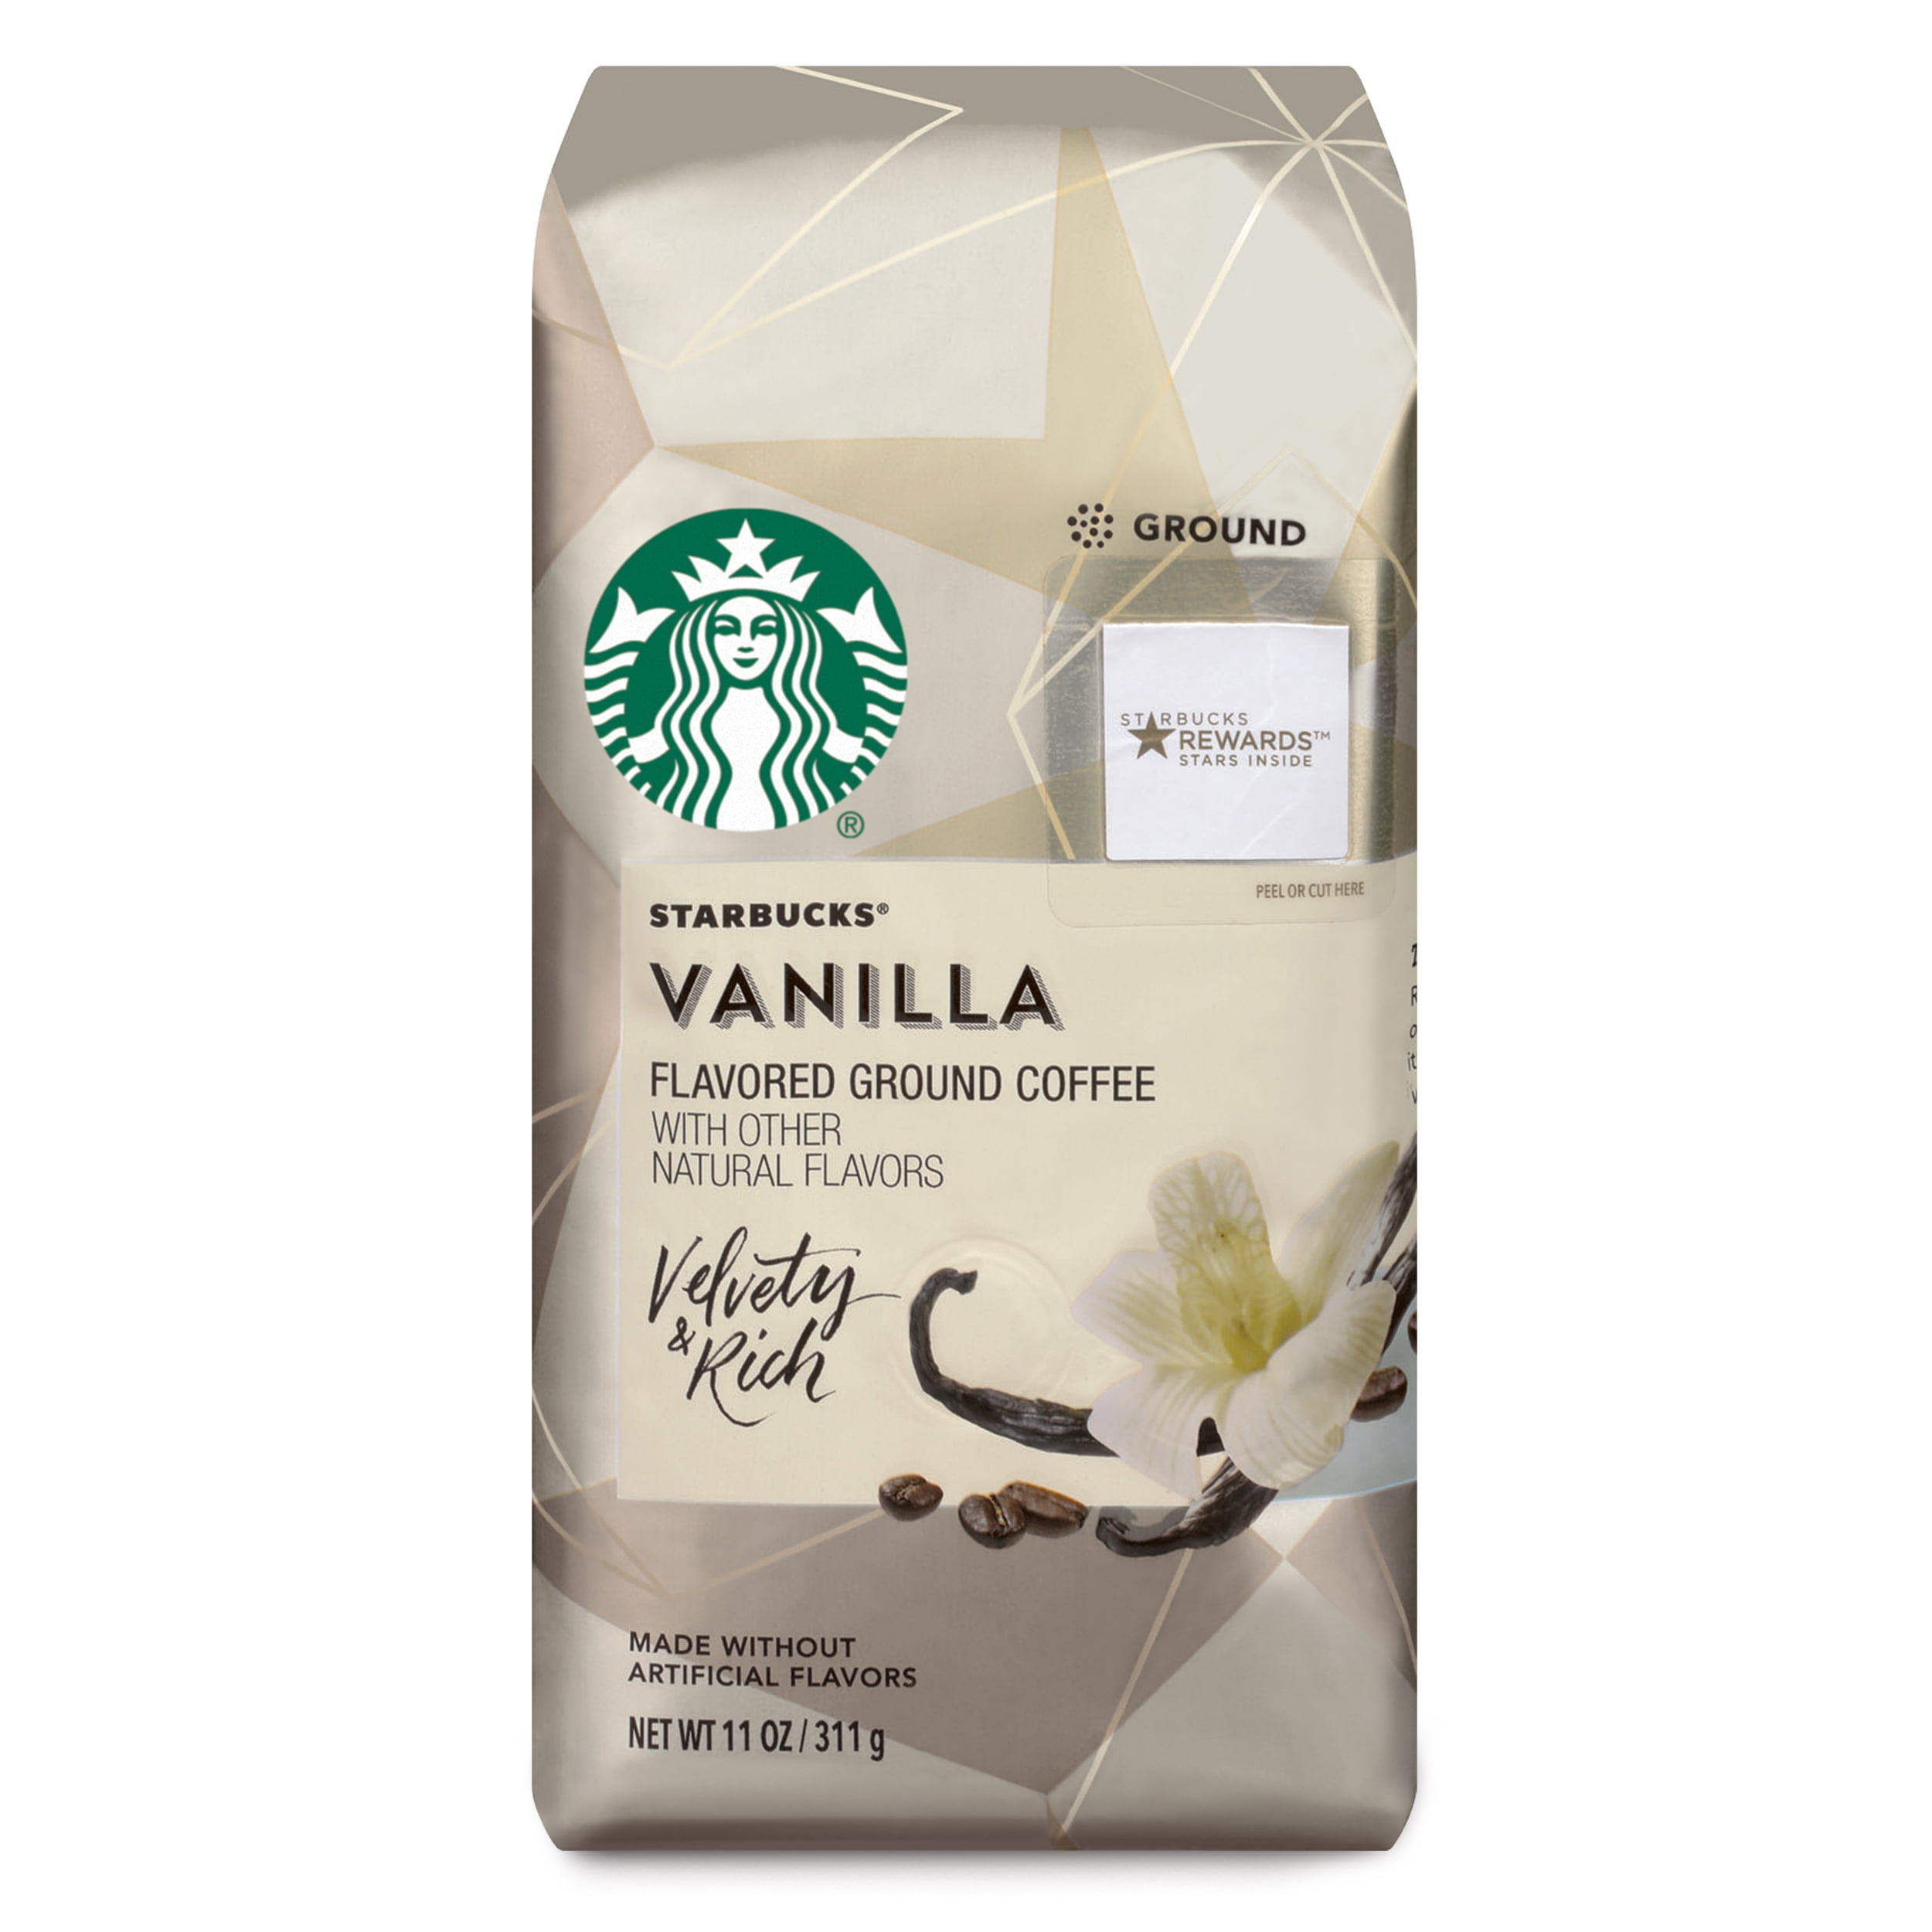 Starbucks Flavored Ground Coffee Vanilla No Artificial Flavors